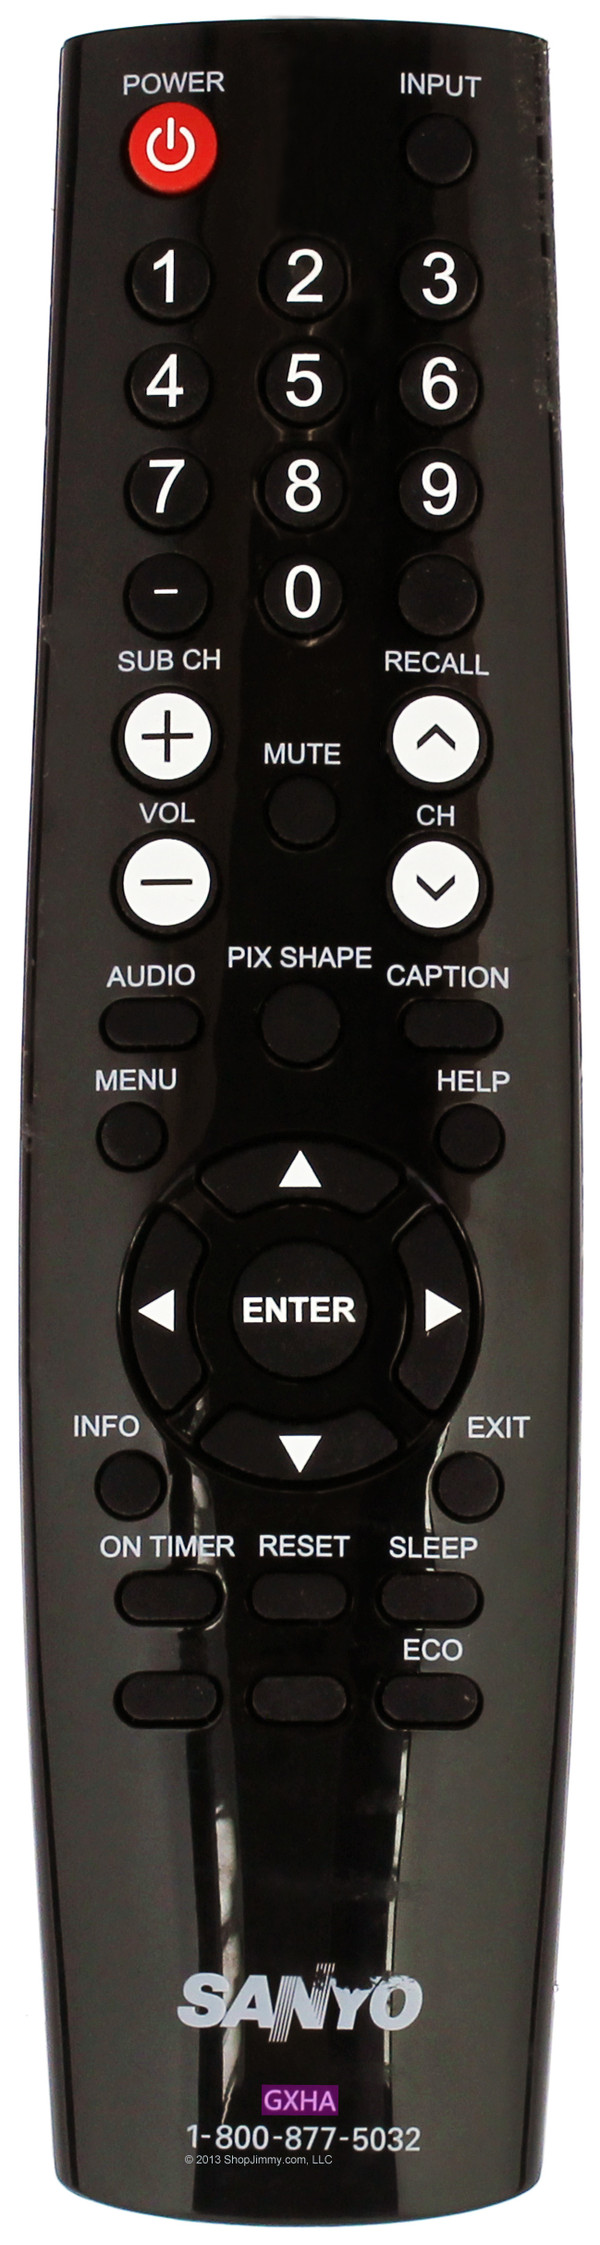 Sanyo GXHA Remote Control--NEW